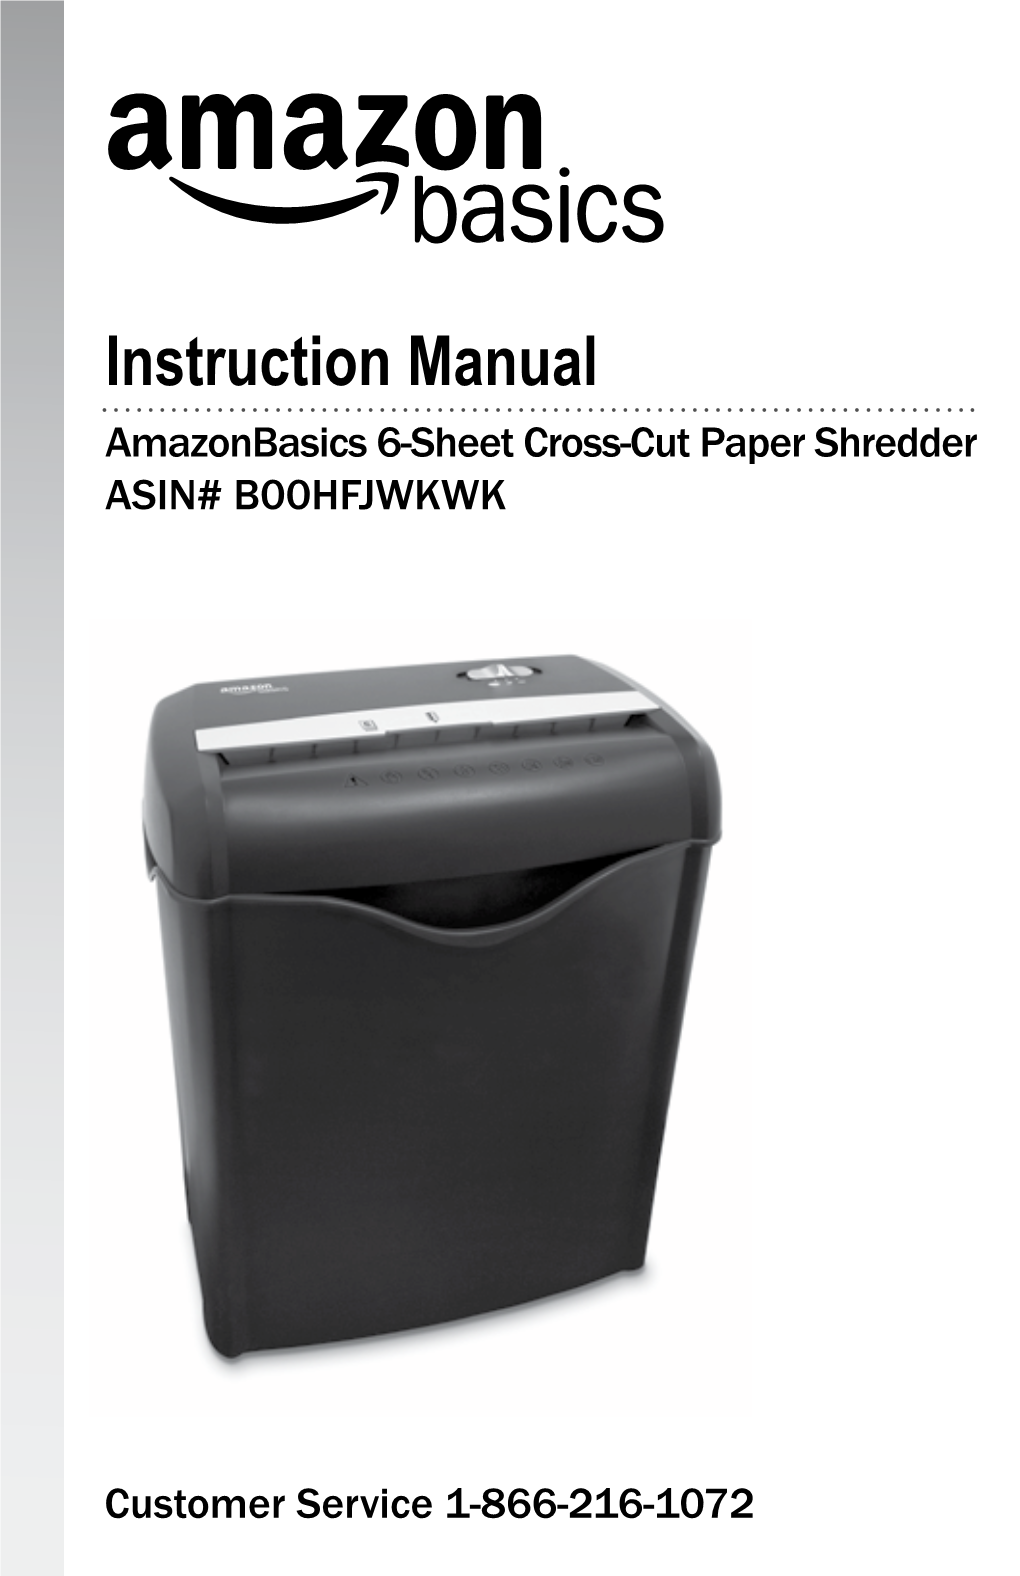 Instruction Manual Amazonbasics 6-Sheet Cross-Cut Paper Shredder ASIN# B00HFJWKWK